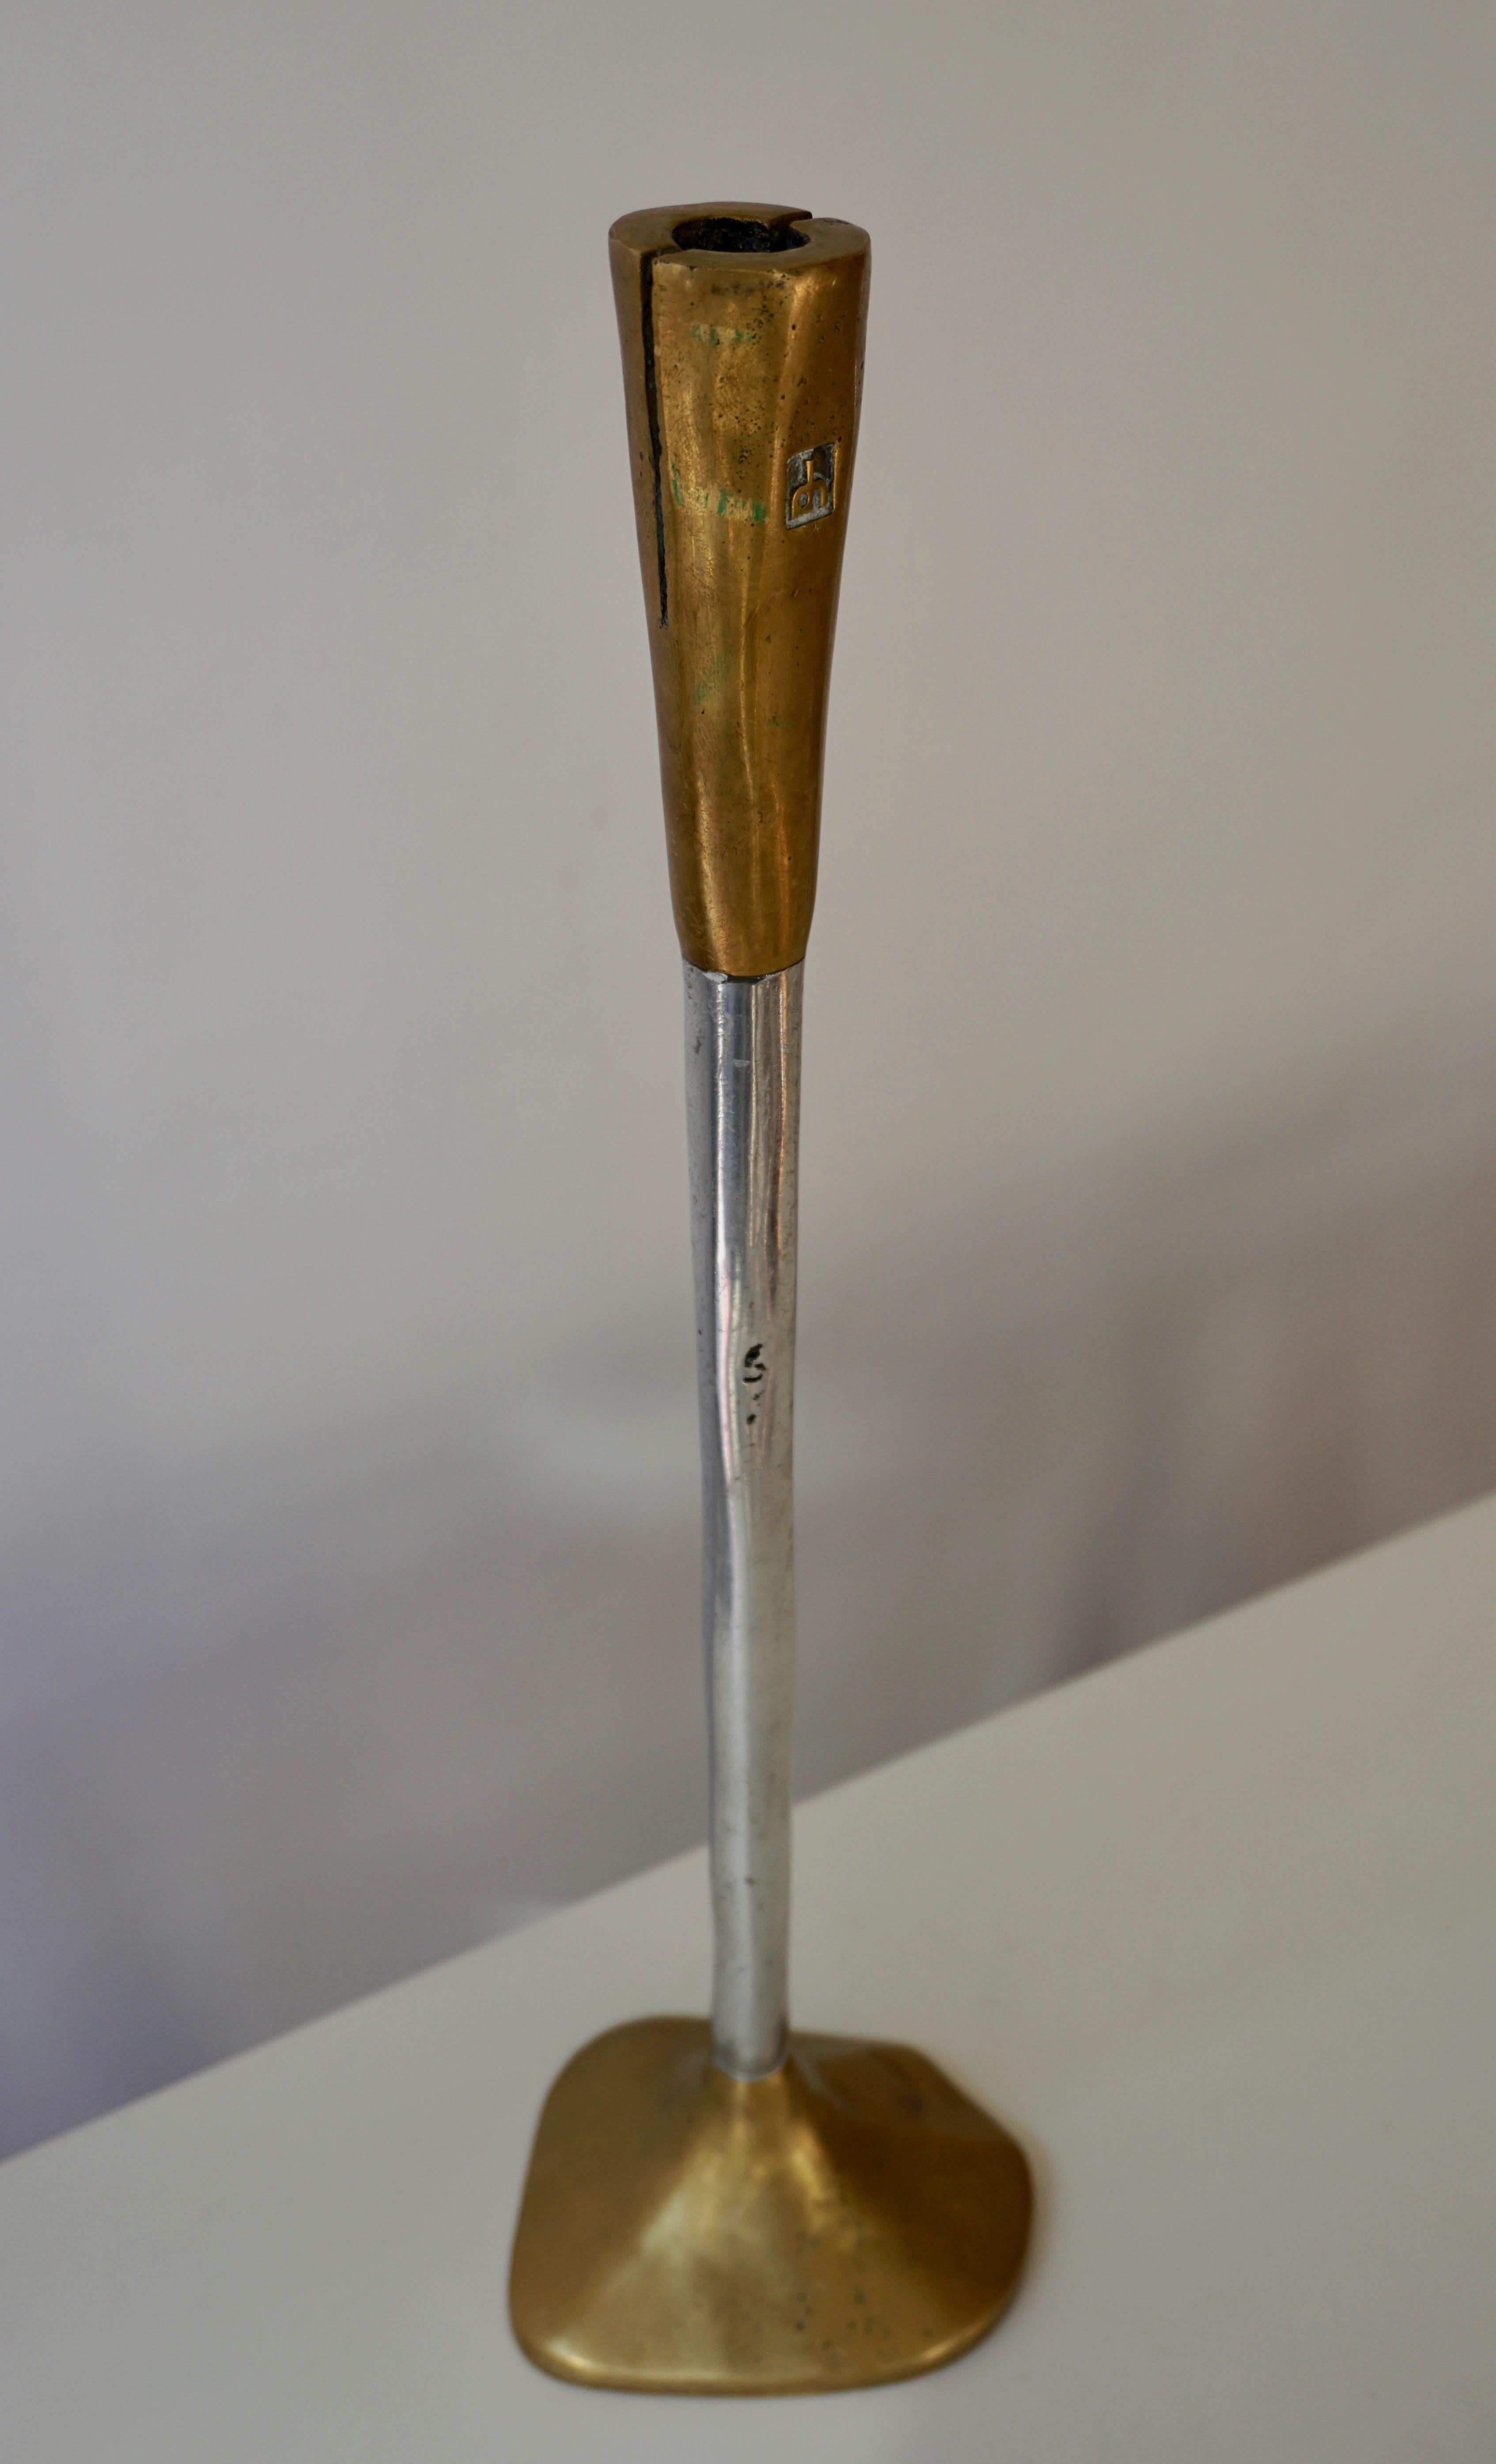 Bronze candlestick.
Measure: Height 47 cm.